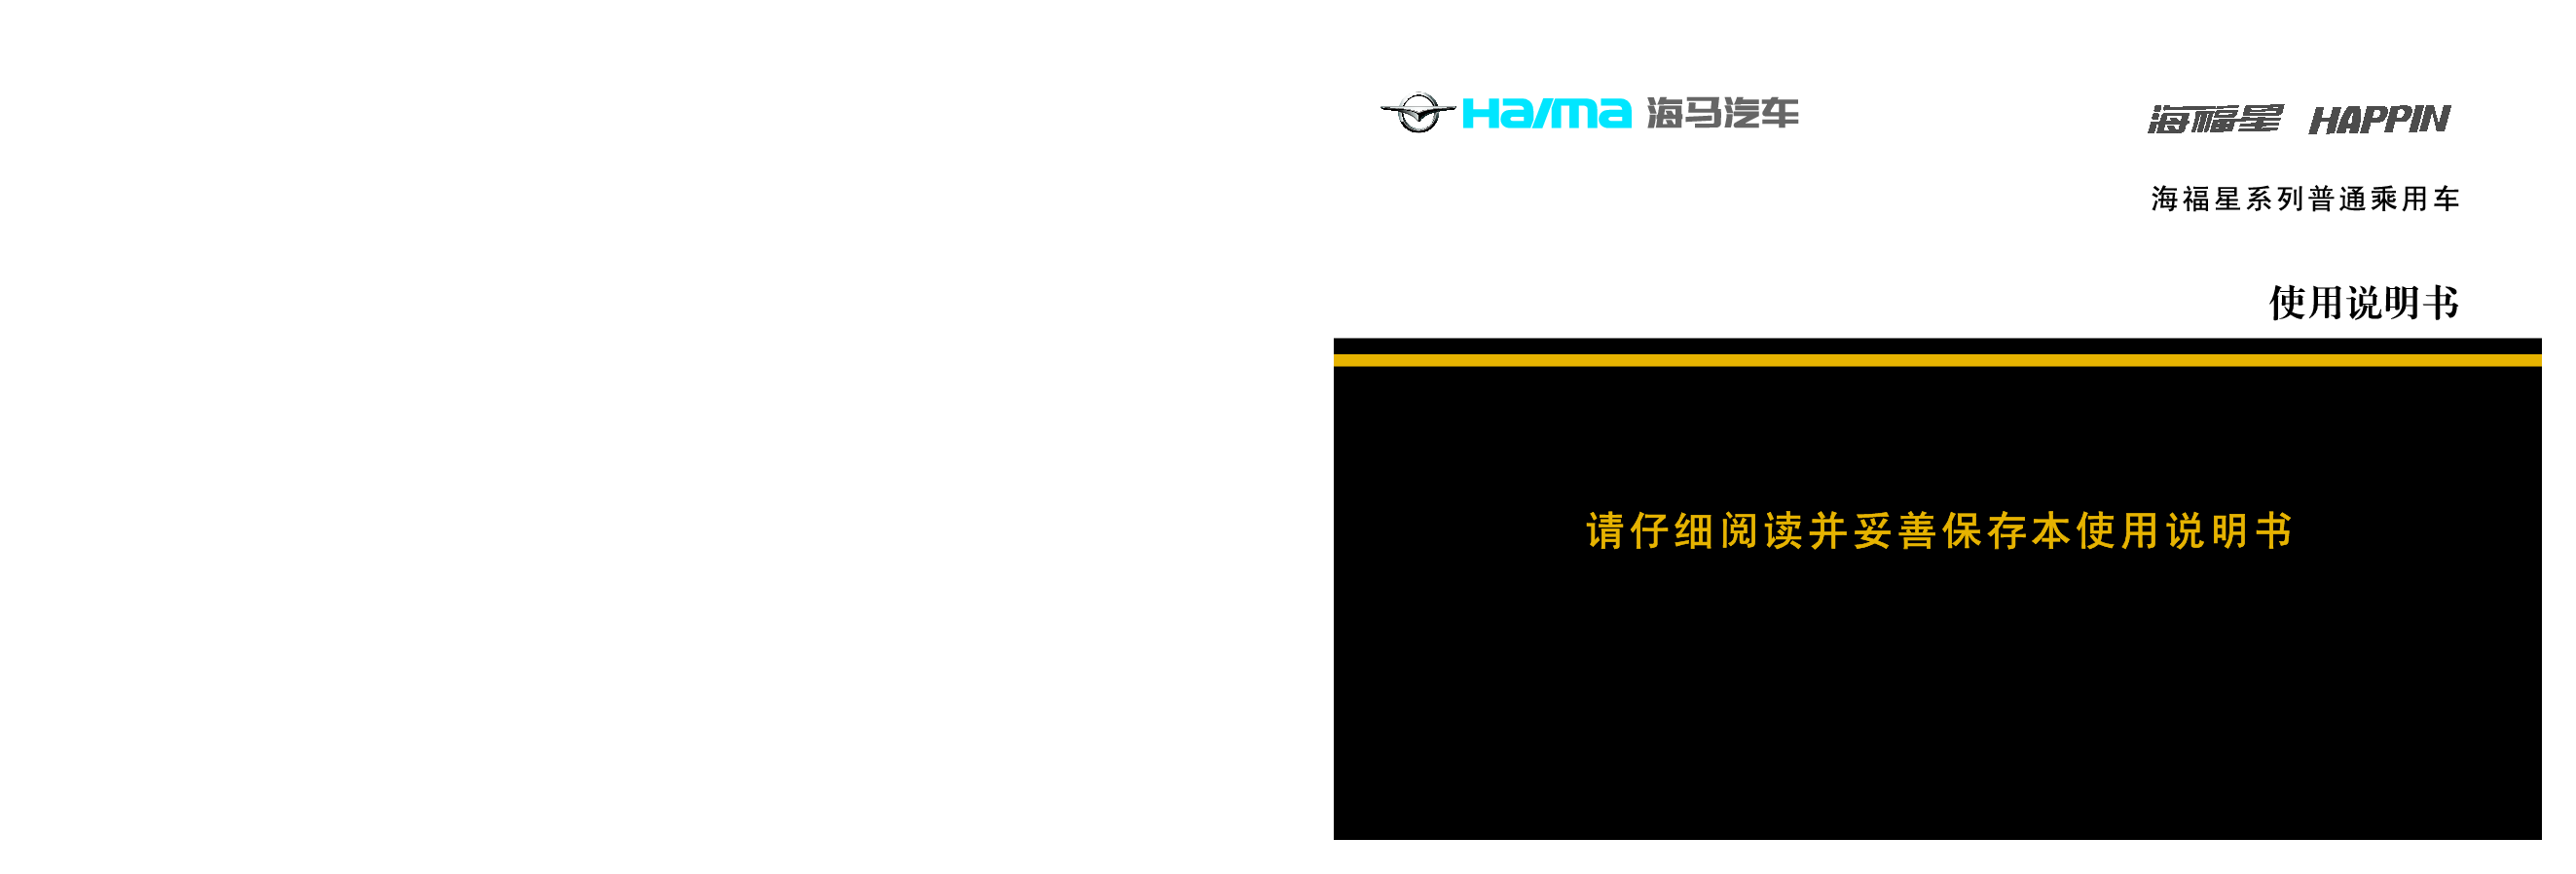 海马 Haima HAPPIN 海福星 2013 使用说明书 封面